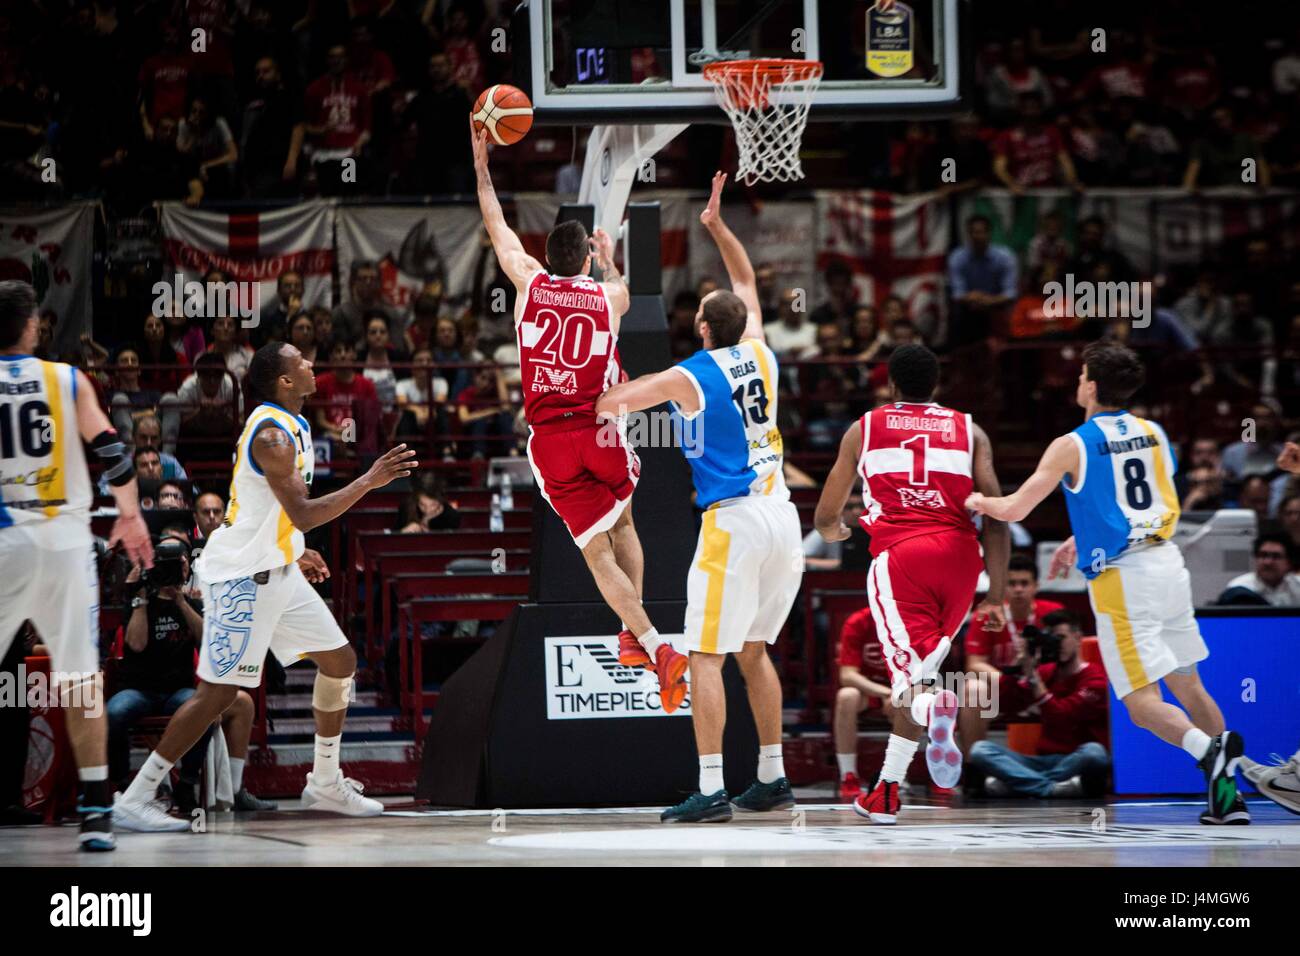 Liga de baloncesto italiana fotografías e imágenes de alta resolución -  Alamy